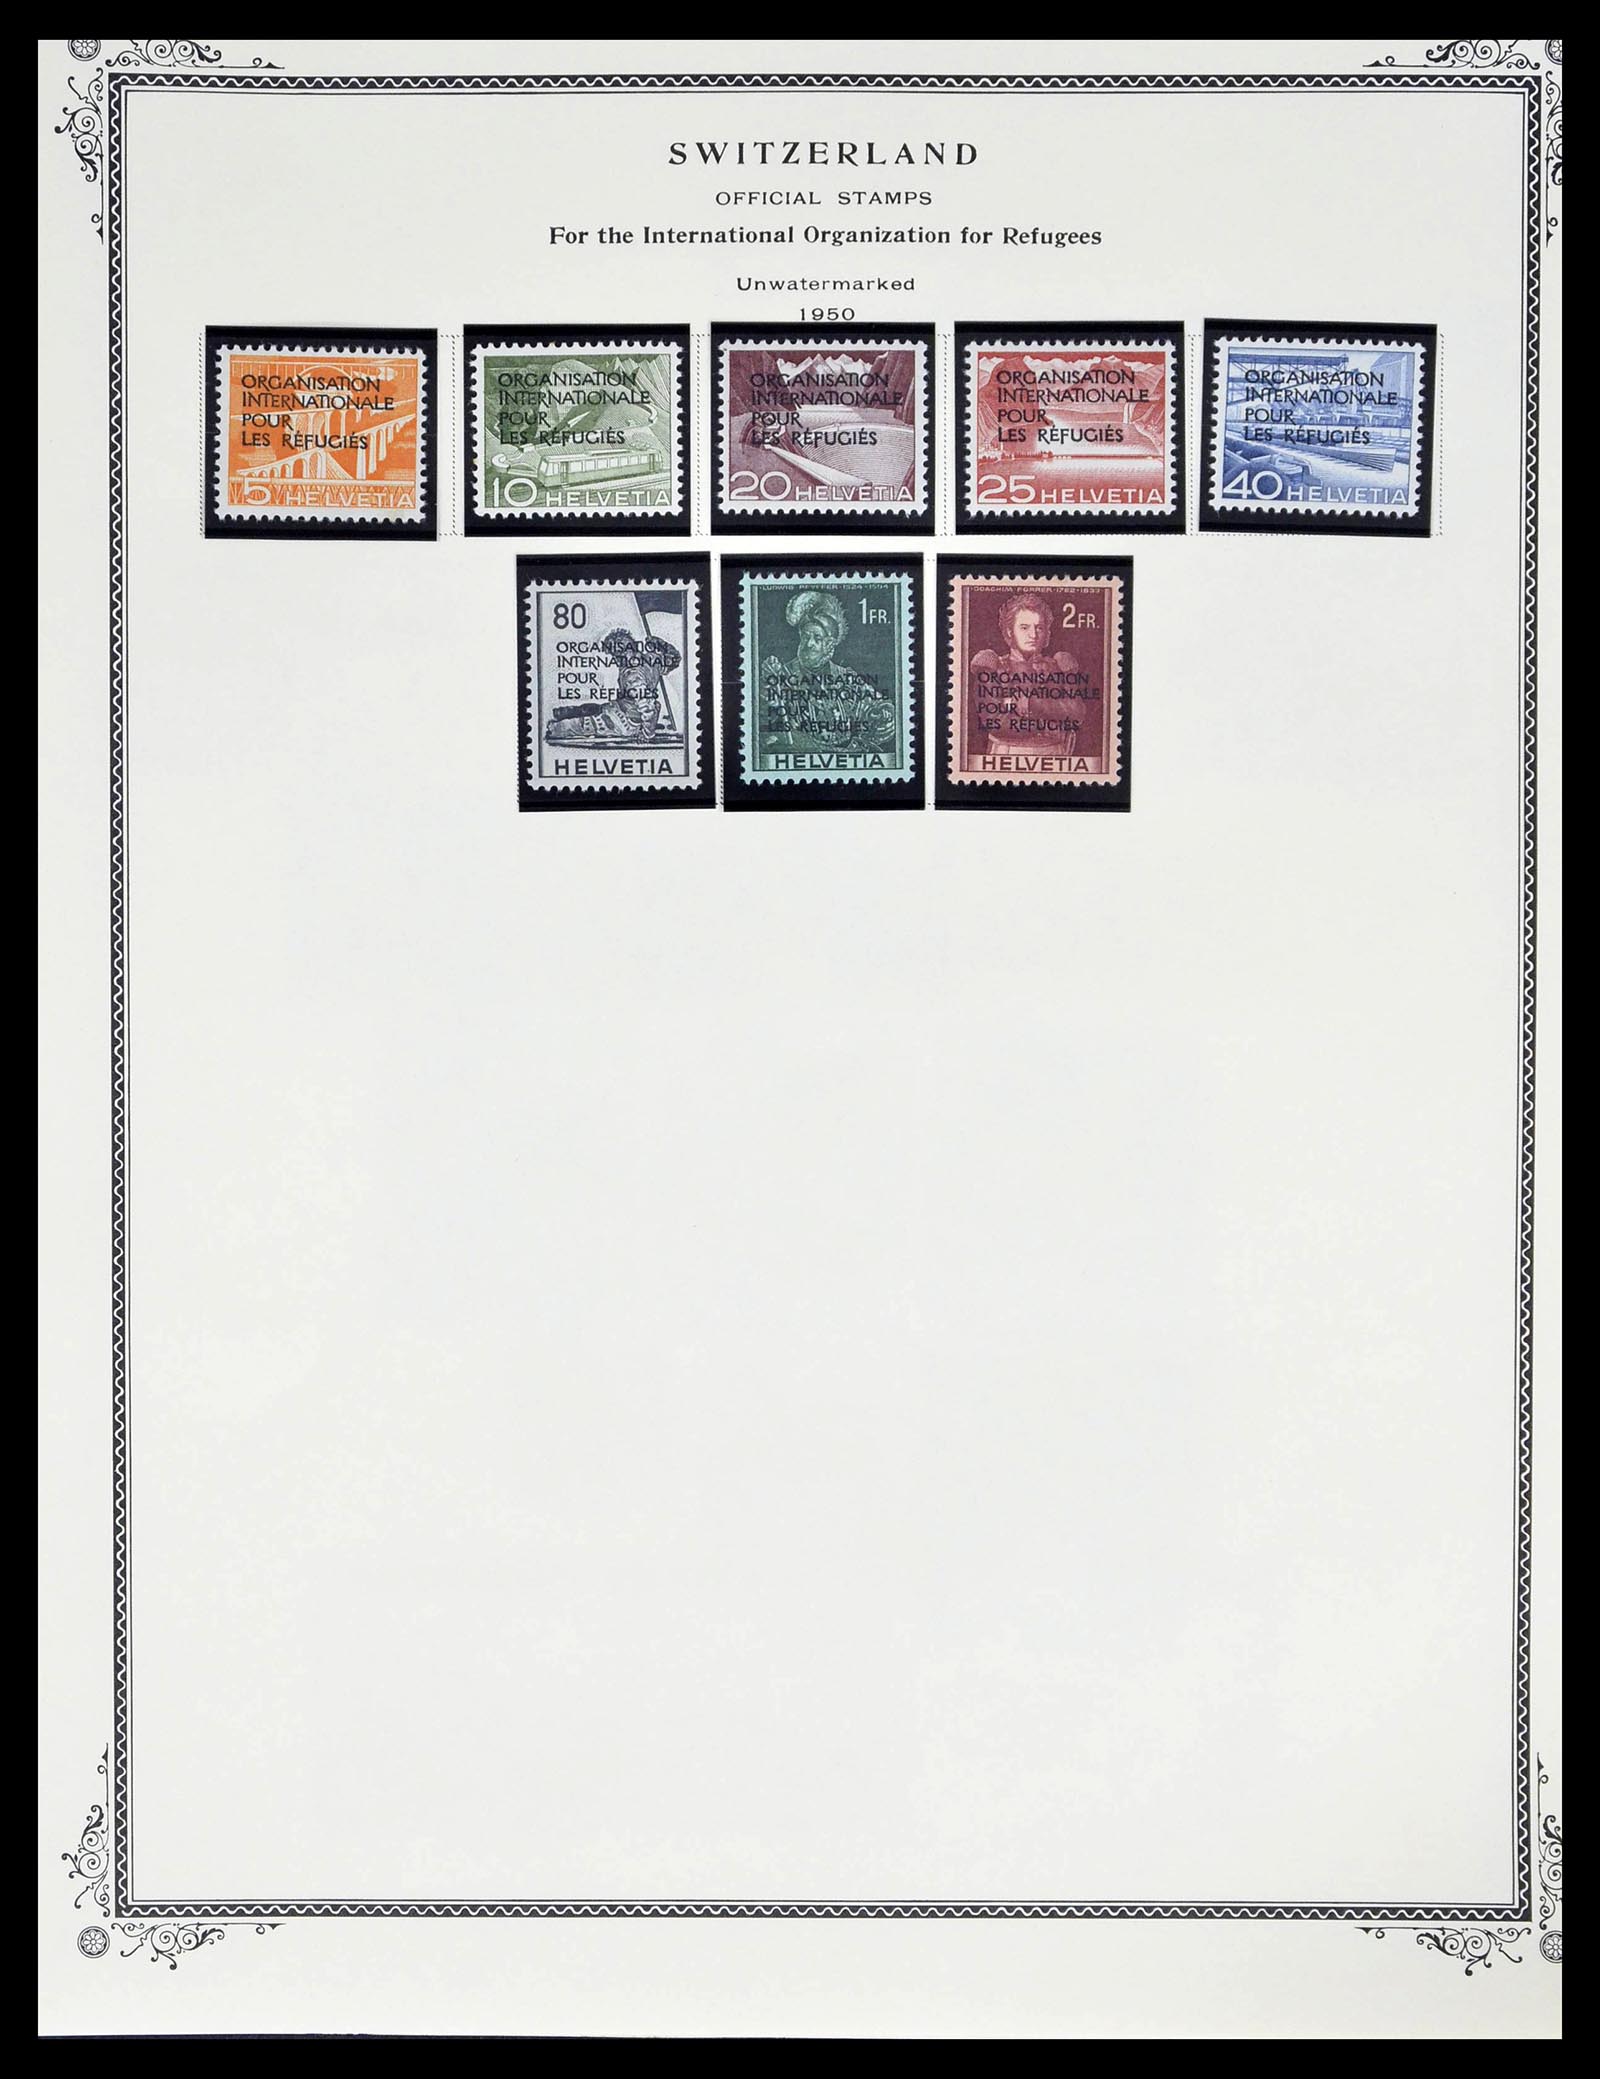 39178 0254 - Stamp collection 39178 Switzerland 1850-1989.